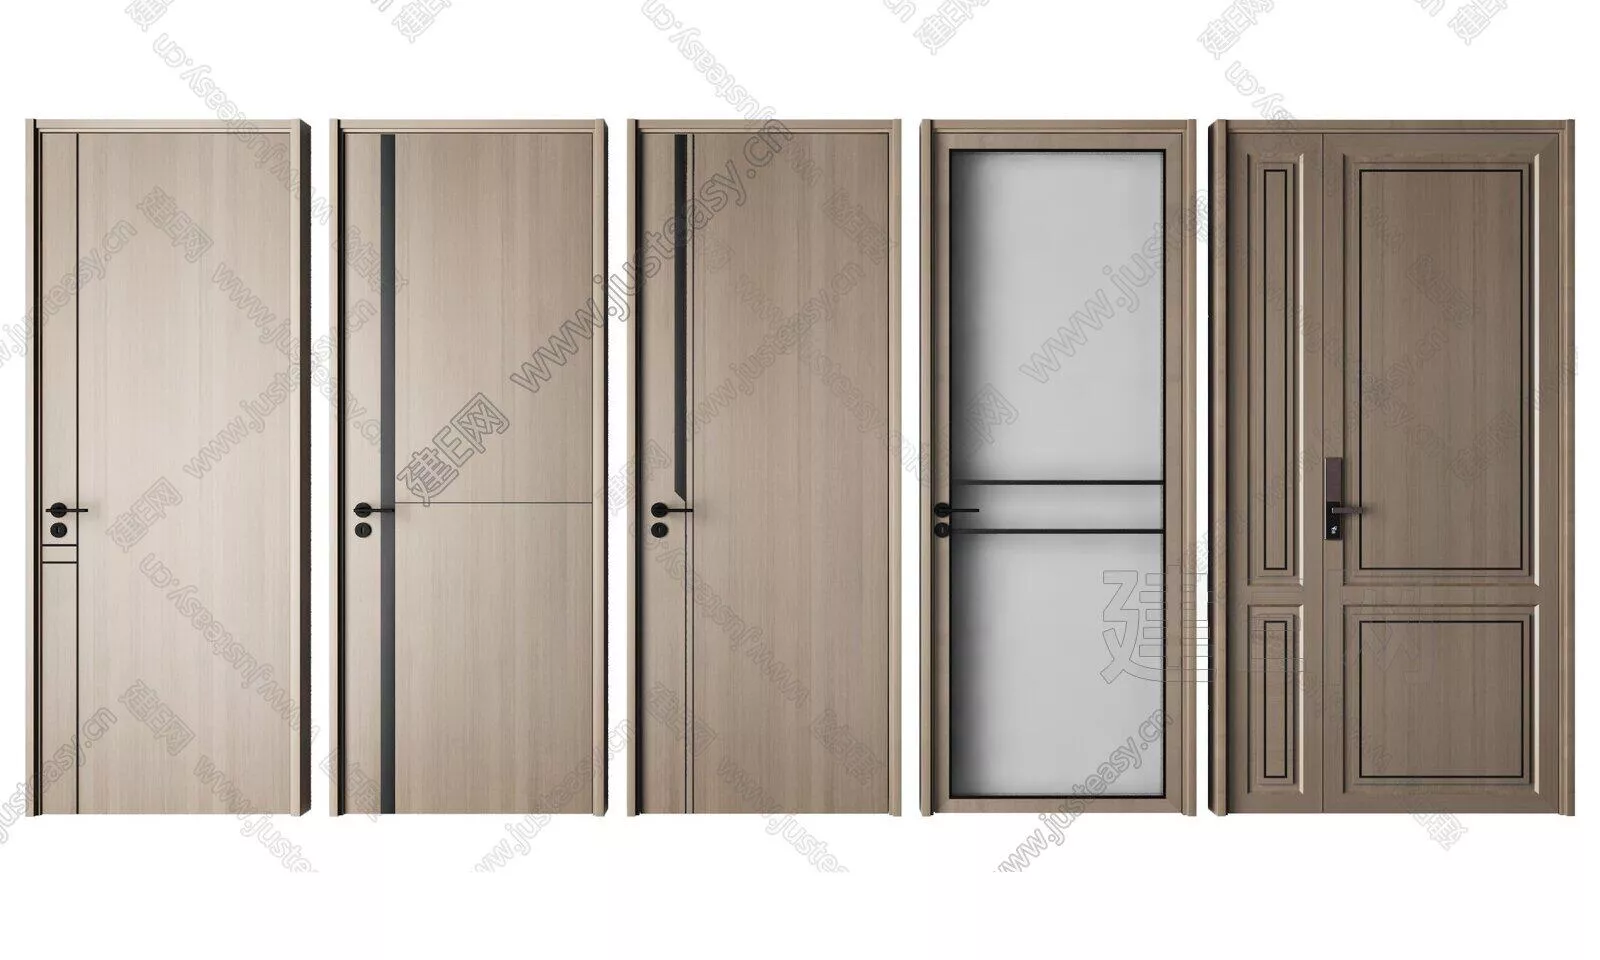 MODERN DOOR AND WINDOWS - SKETCHUP 3D MODEL - ENSCAPE - 106319355